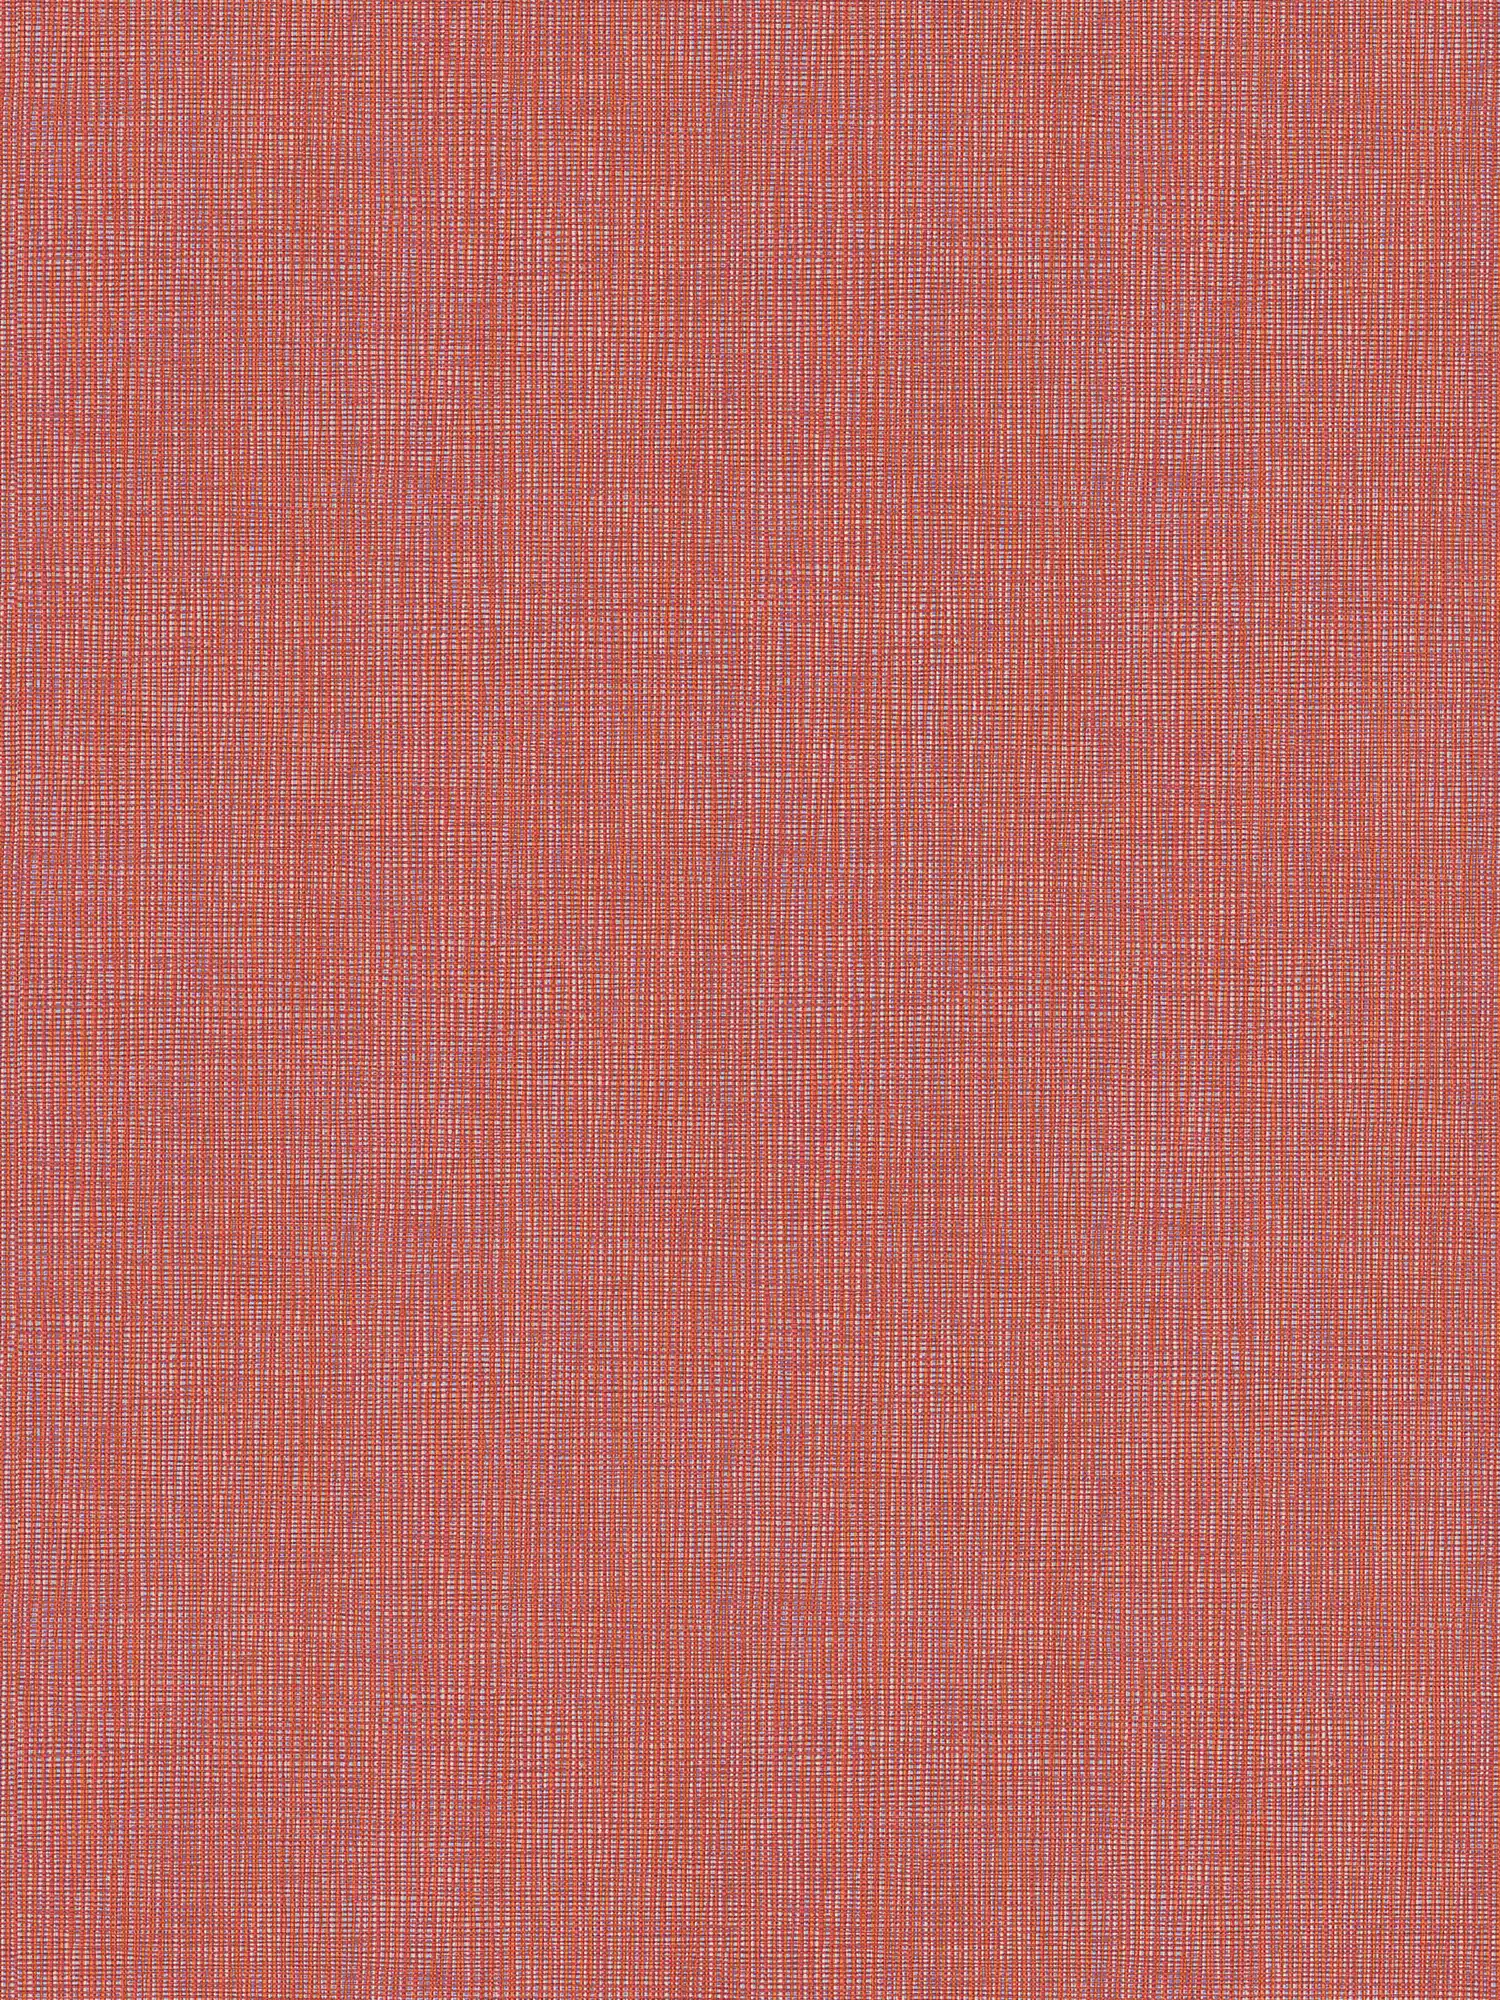 Behang Rood met Textiel Patroon in Rood Oranje & Paars
